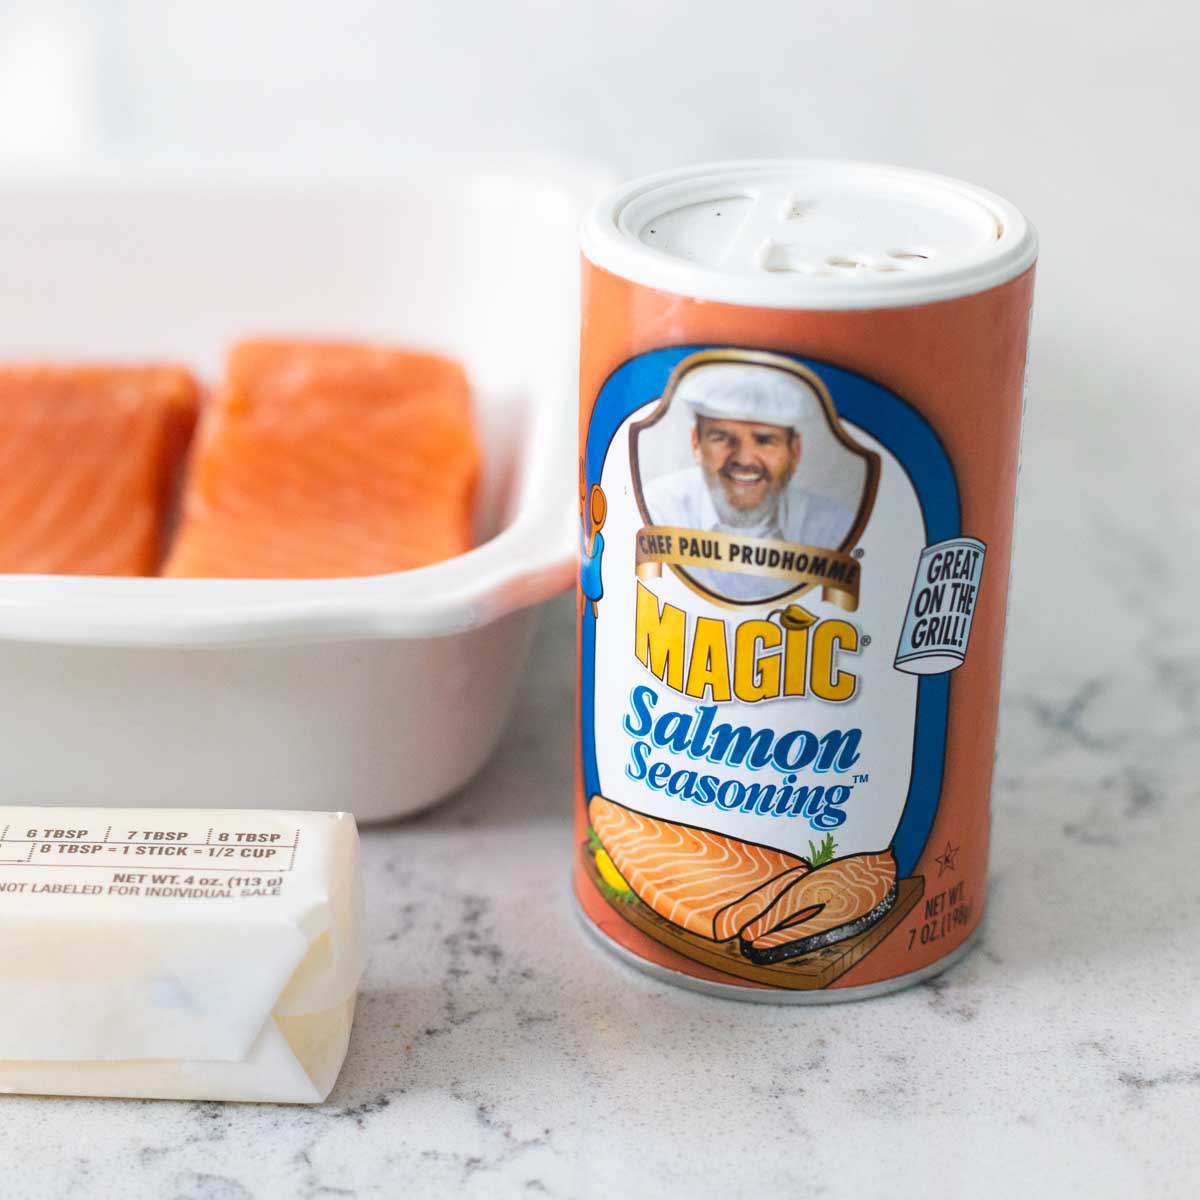 The bottle of salmon seasoning sits next to a baking pan of salmon.